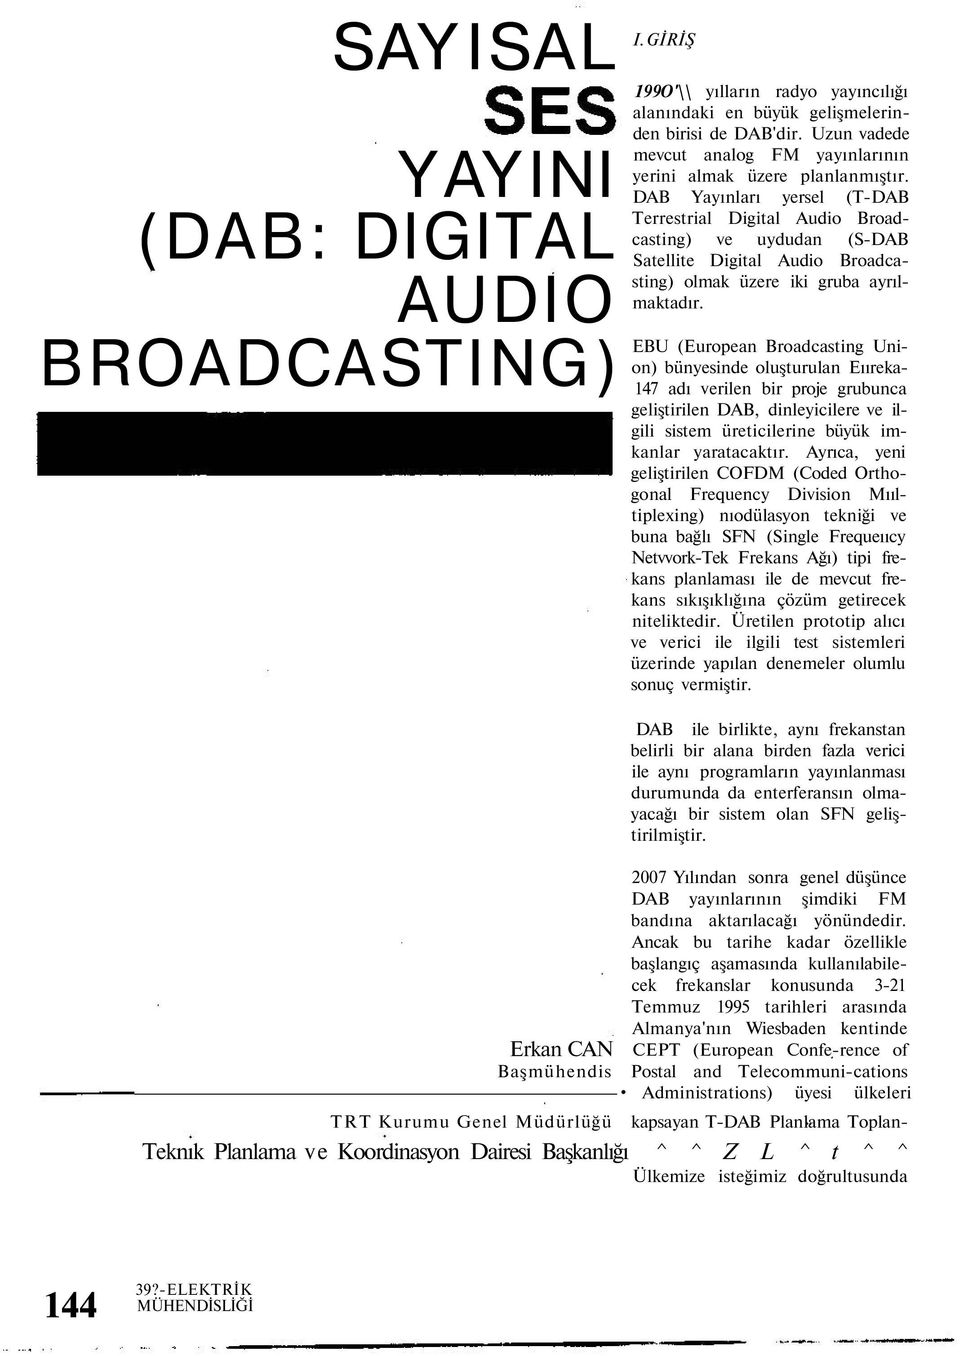 DAB Yayınları yersel (T-DAB Terrestrial Digital Audio Broadcasting) ve uydudan (S-DAB Satellite Digital Audio Broadcasting) olmak üzere iki gruba ayrılmaktadır.